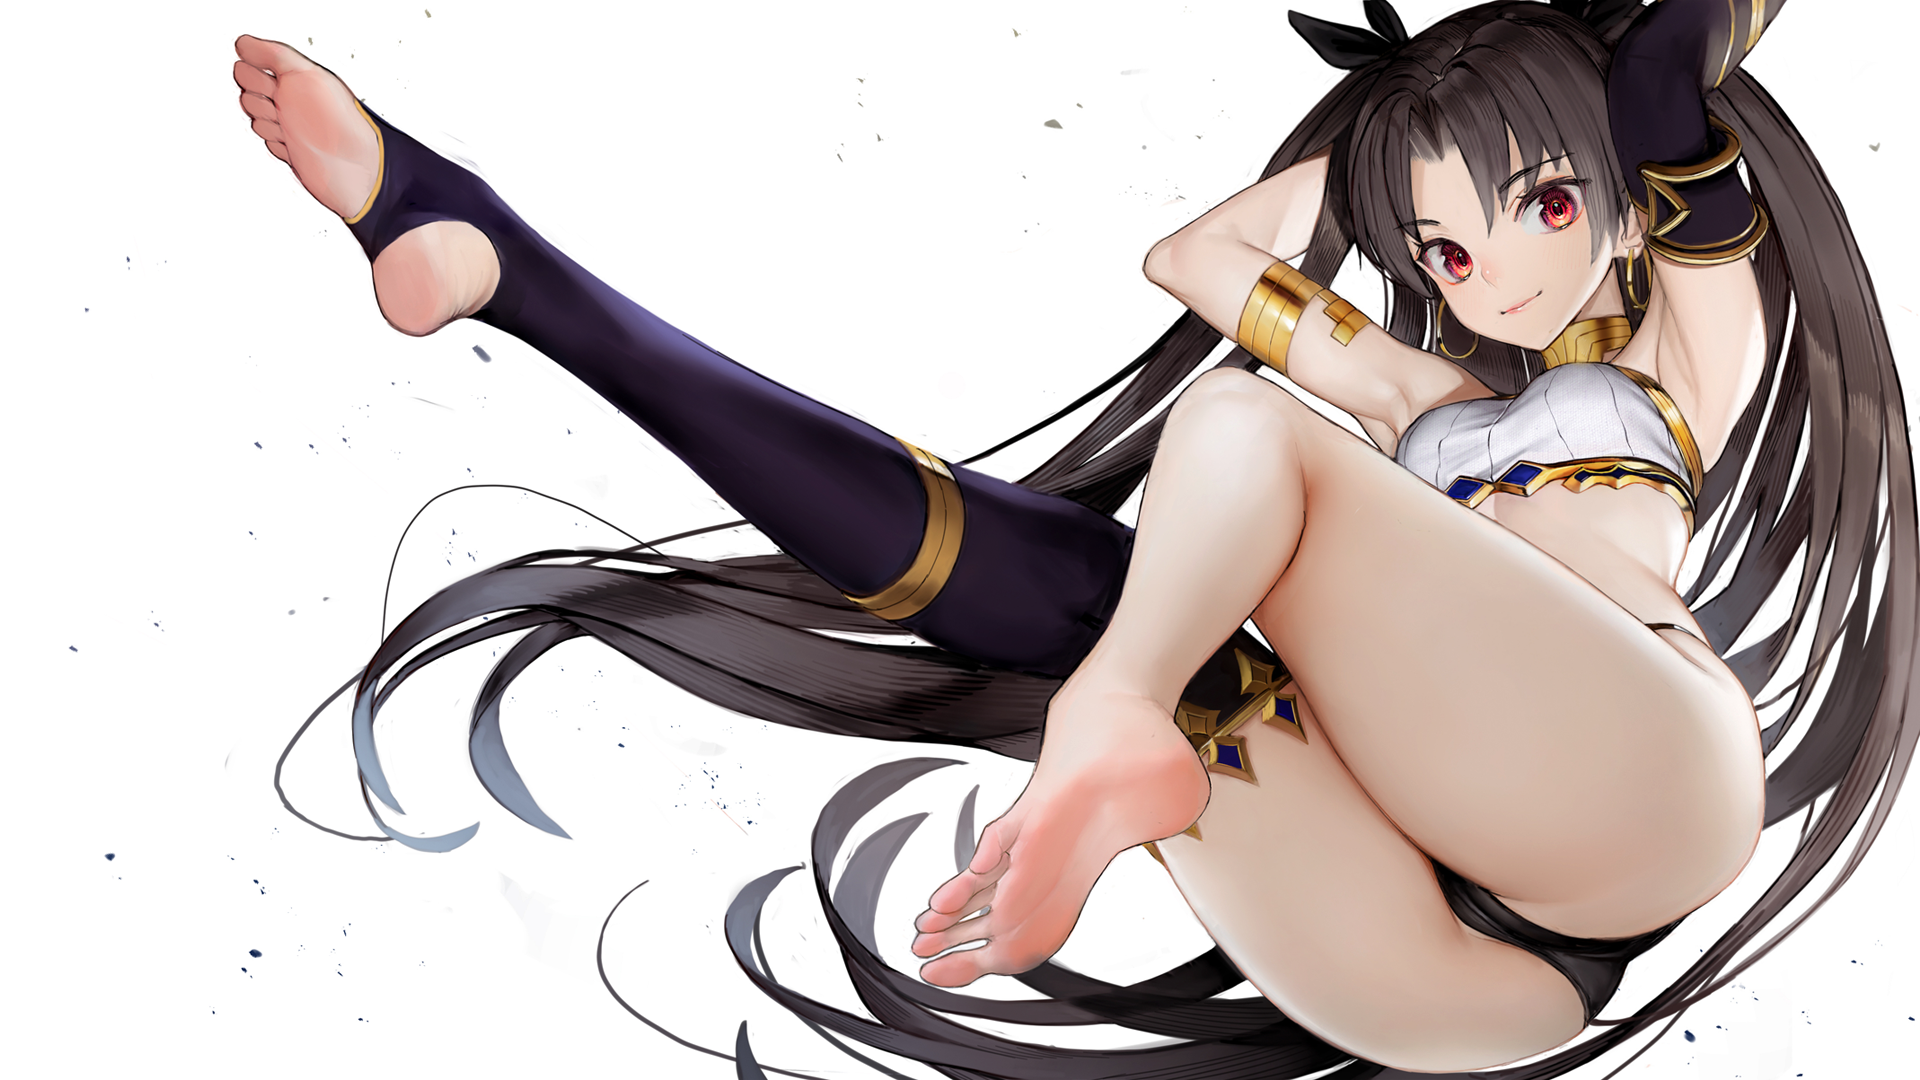 Anime 1920x1080 anime anime girls Fate series Ishtar (Fate/Grand Order) twintails thighs thigh-highs panties stockings black legwear armpits ecchi ass foot fetishism feet Nyatabe dark hair